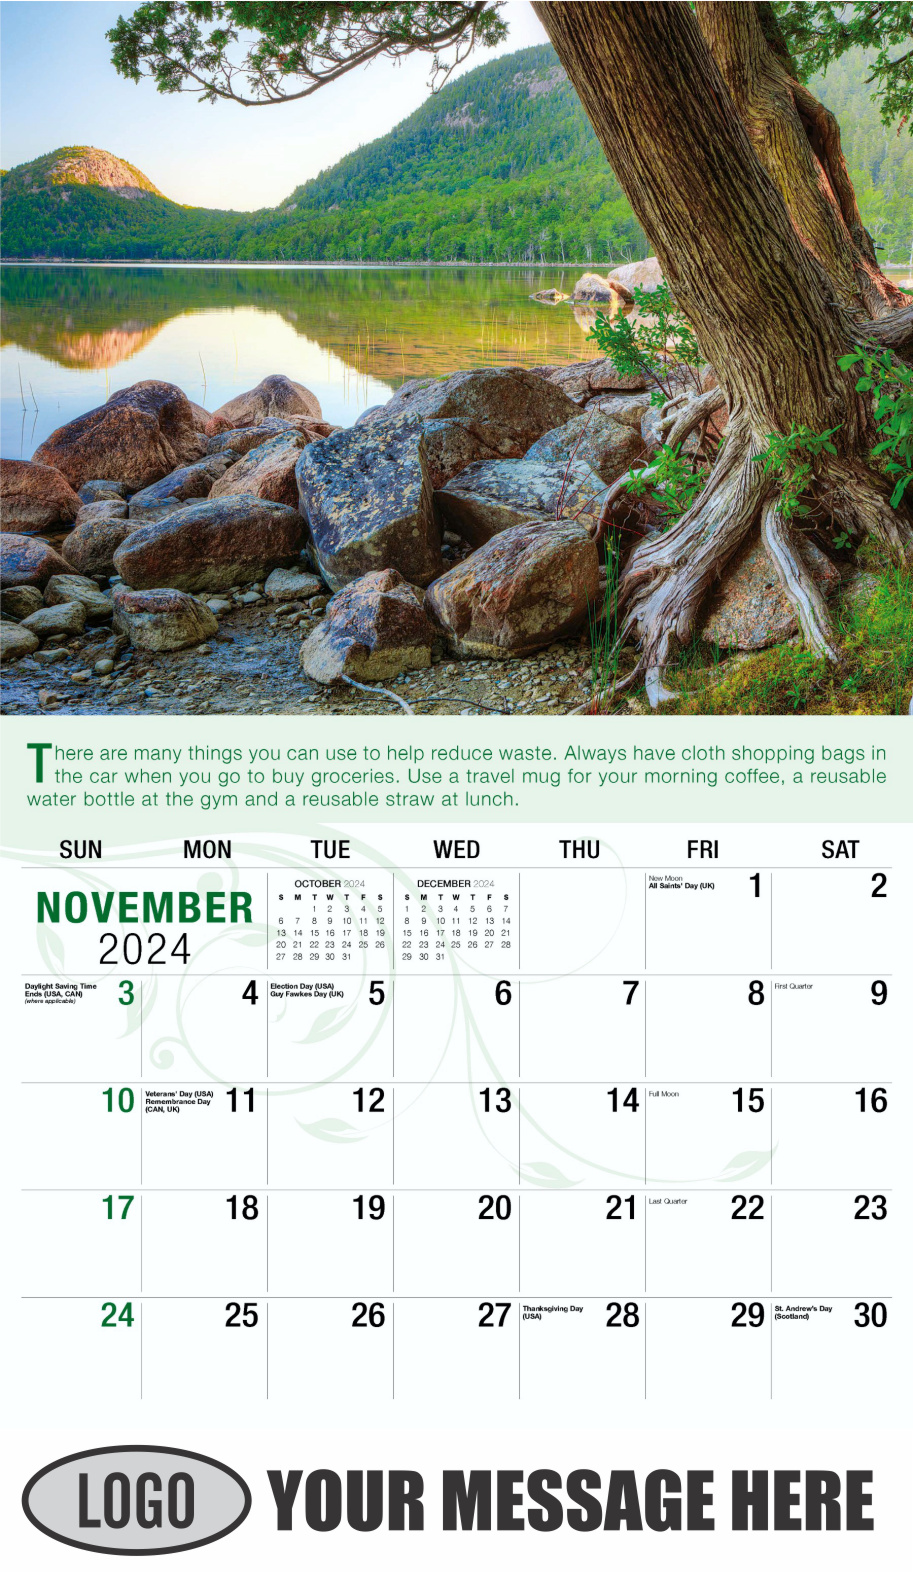 Go Green 2024 Business Promotion Calendar - November